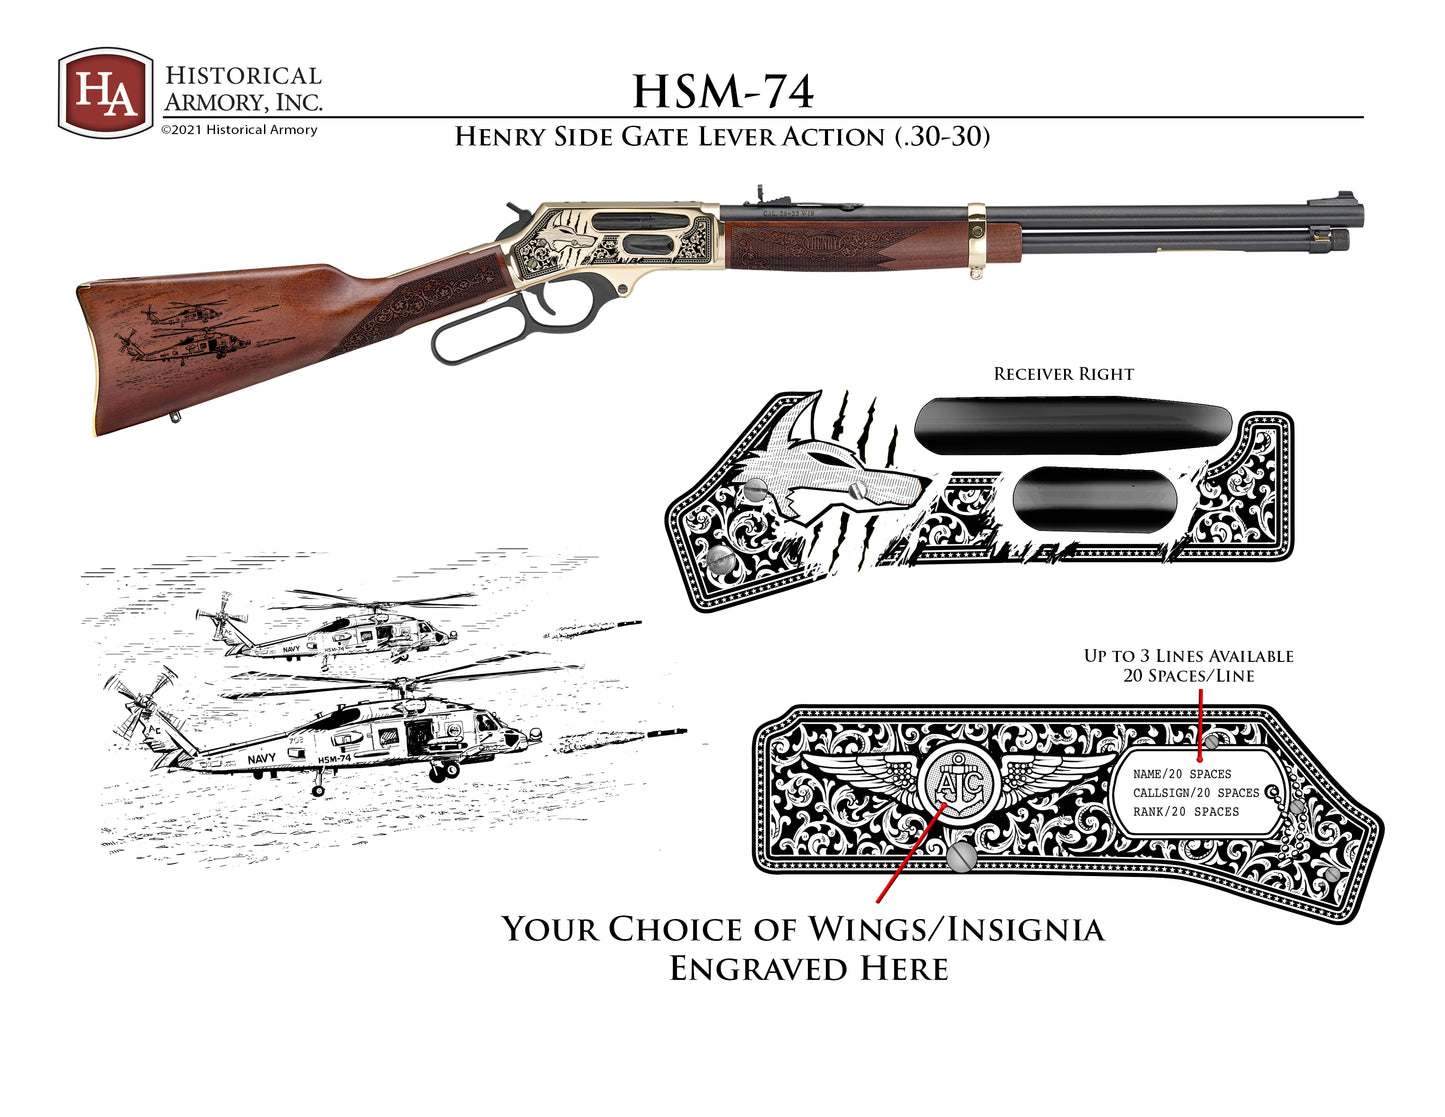 HSM-74 Edition